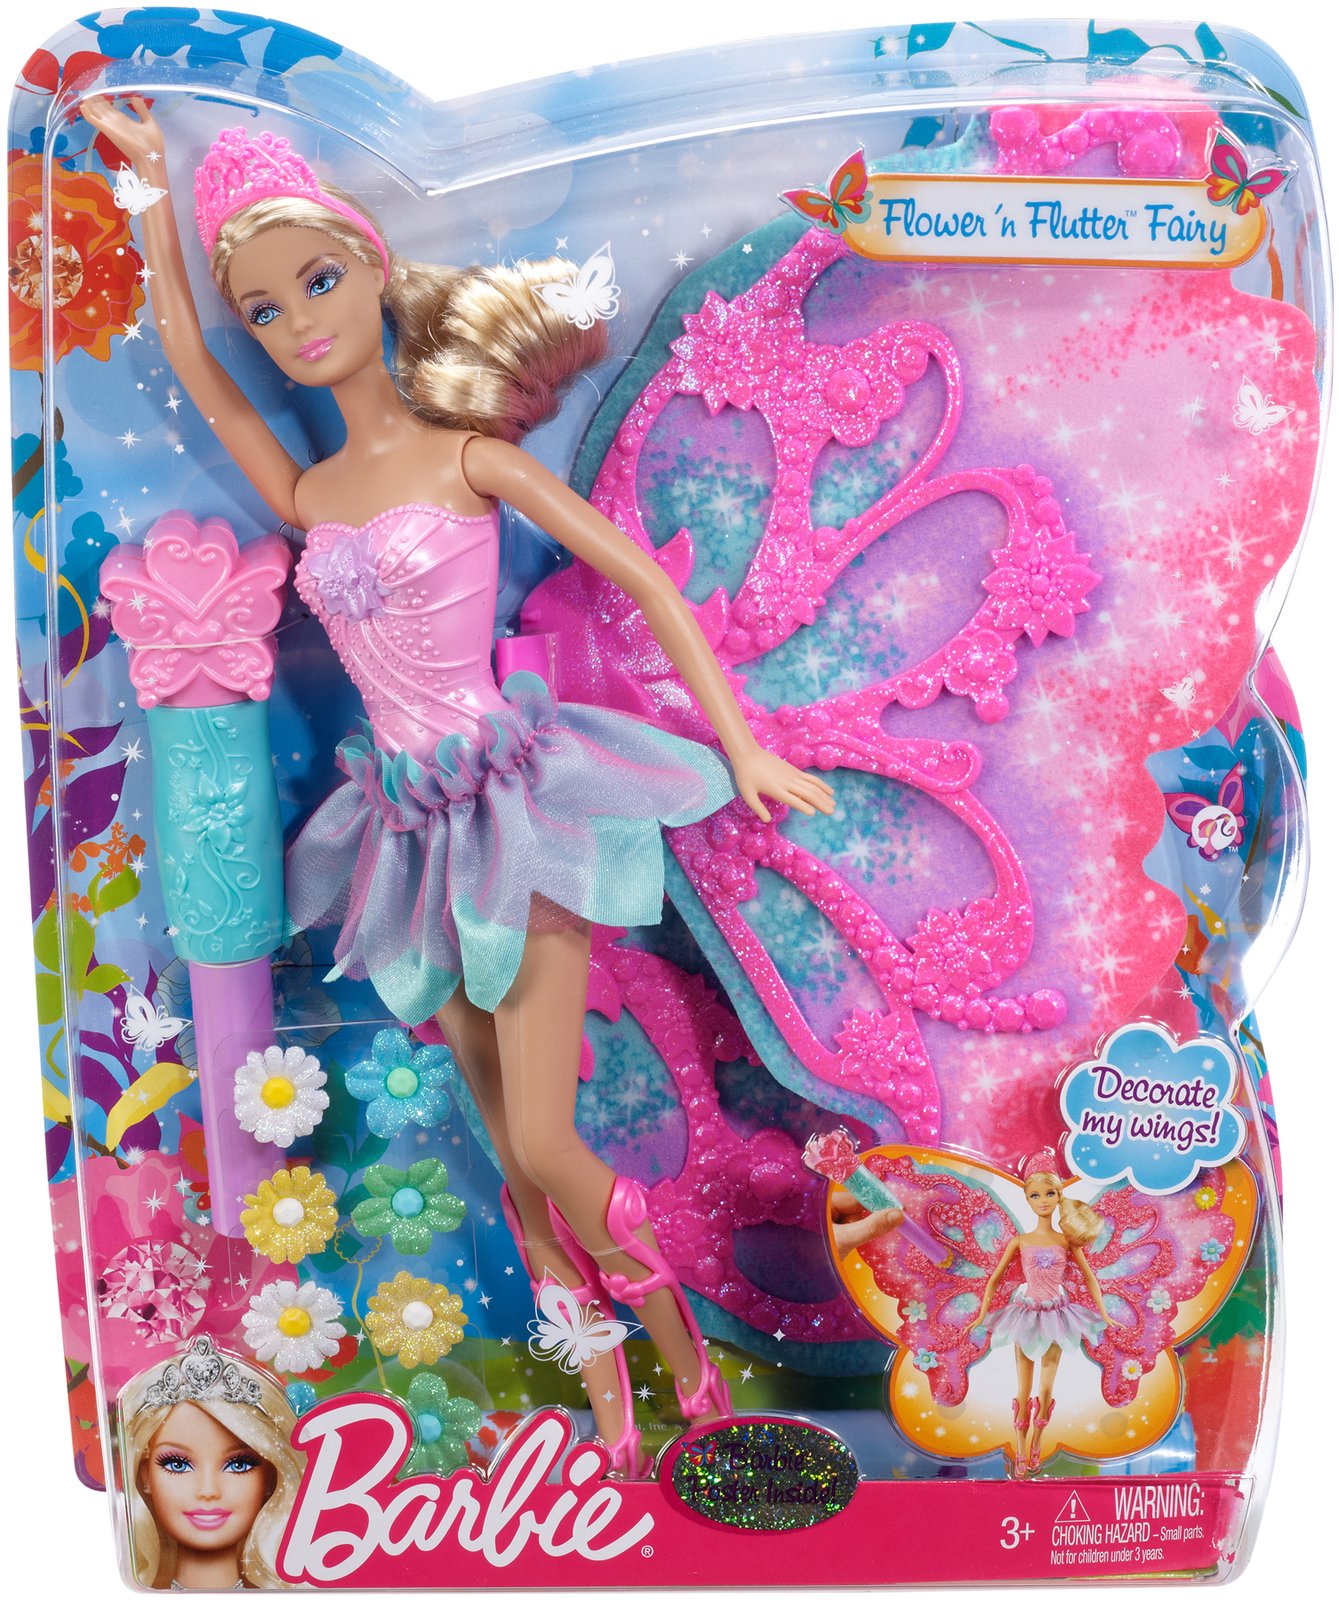 Fairy Barbie Doll Wallpaper Cake Princess House Image Body Girl Pics